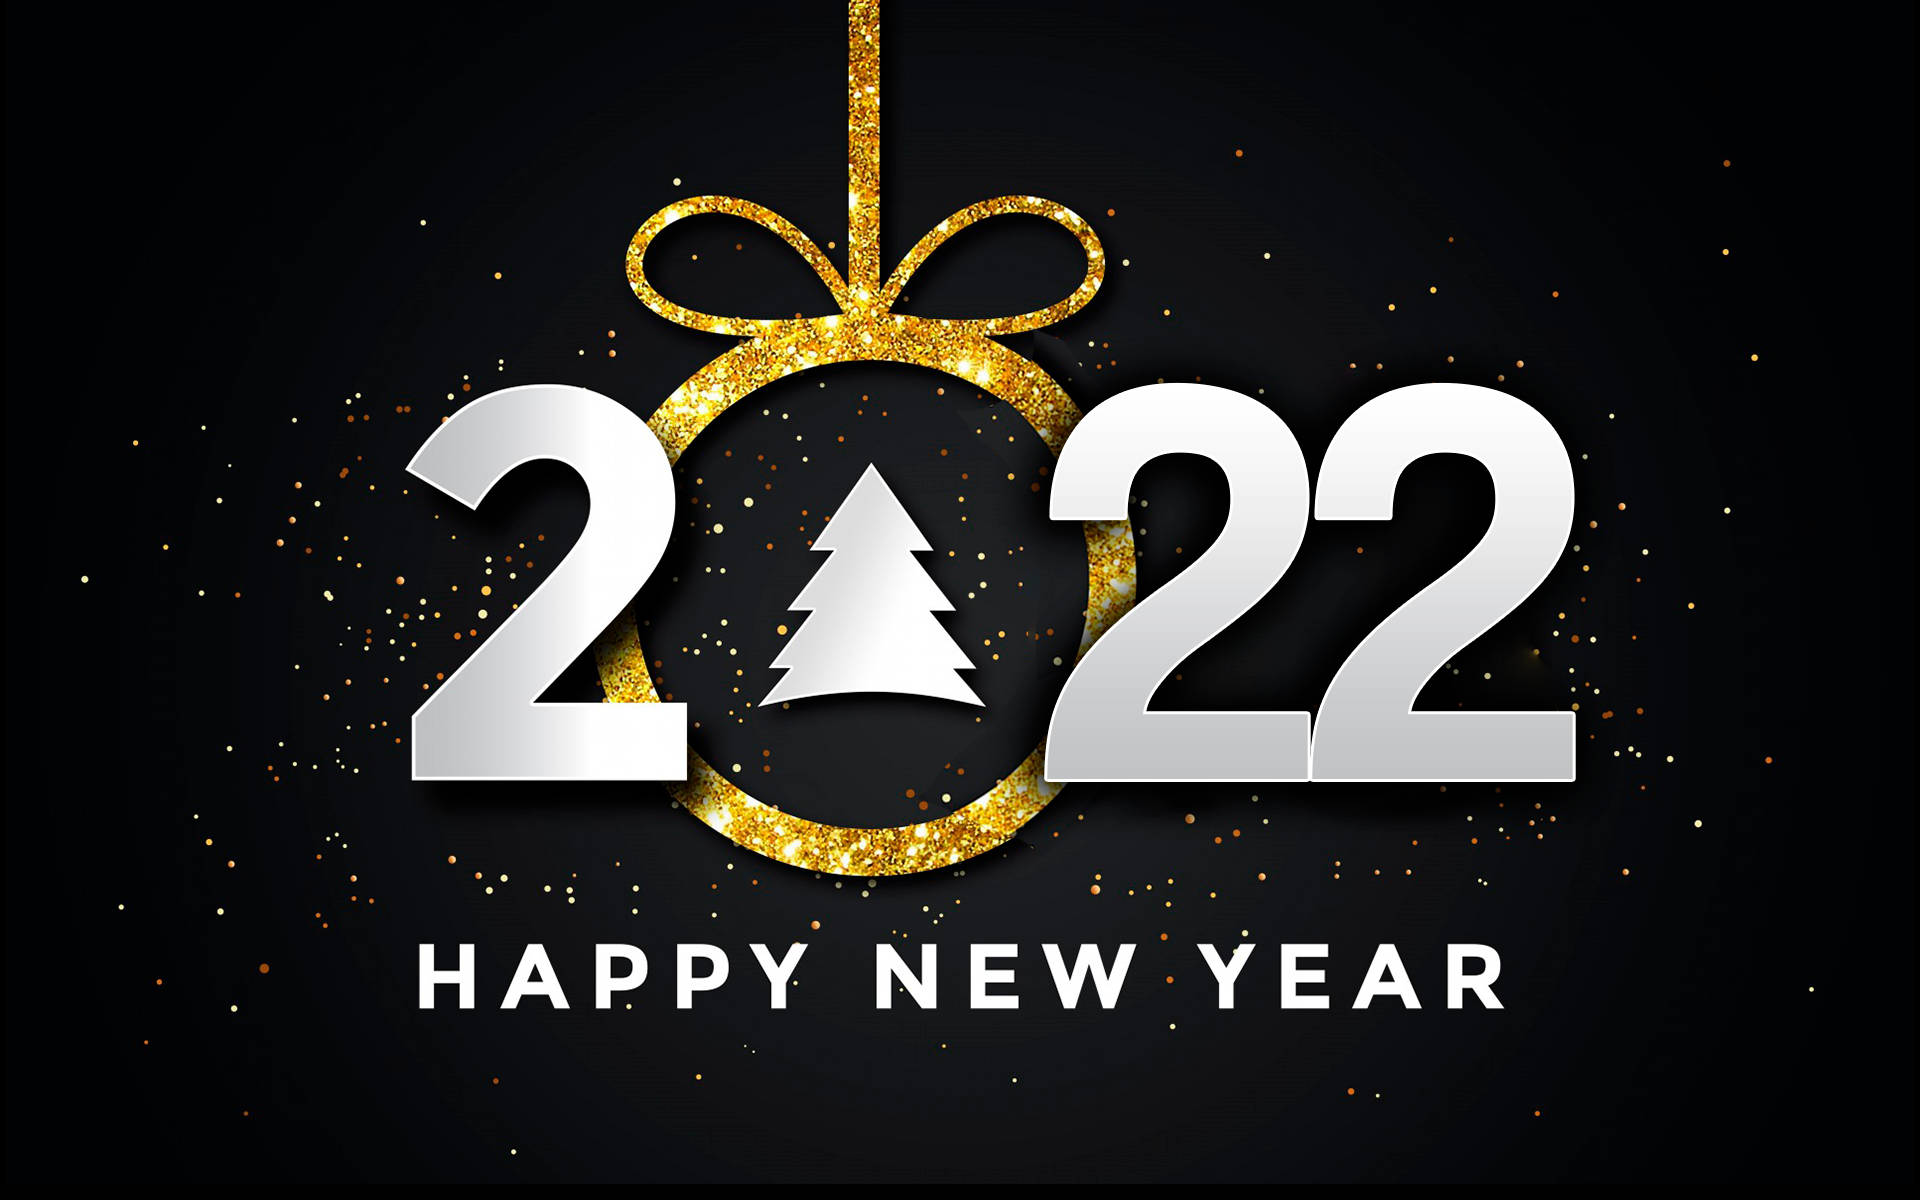 Happy New Year 2022 Tree Ornament Wallpaper